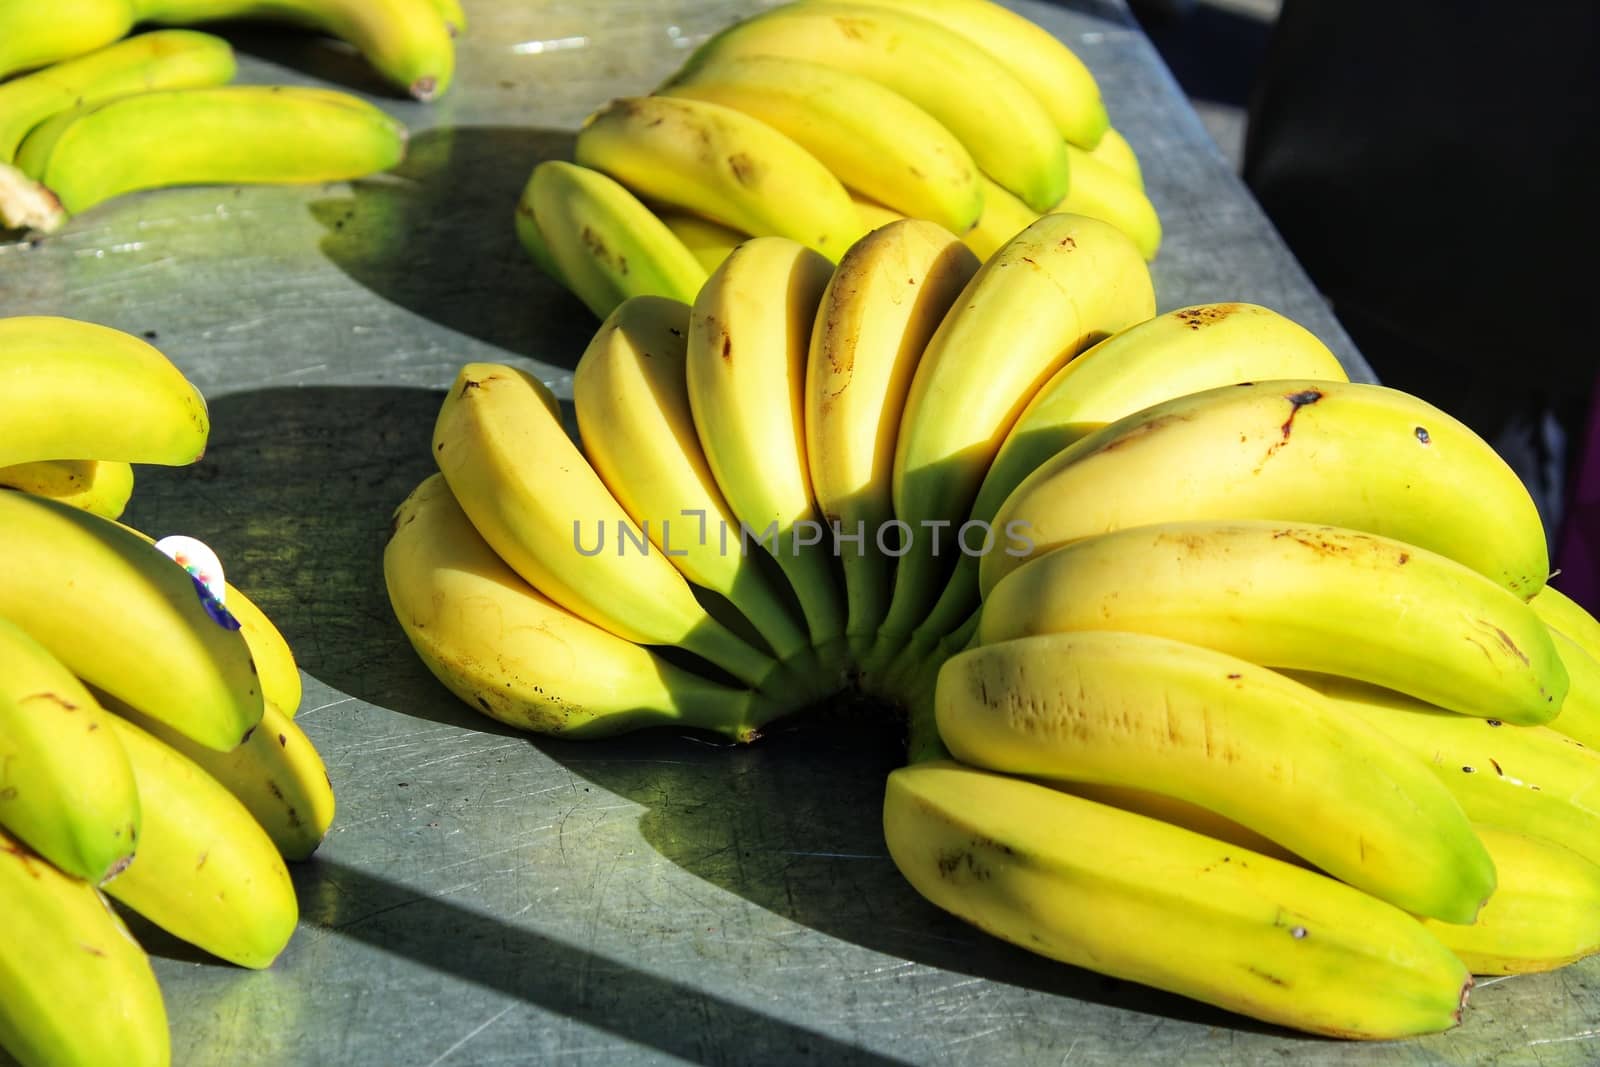 Colorful bananas at a market stall by soniabonet